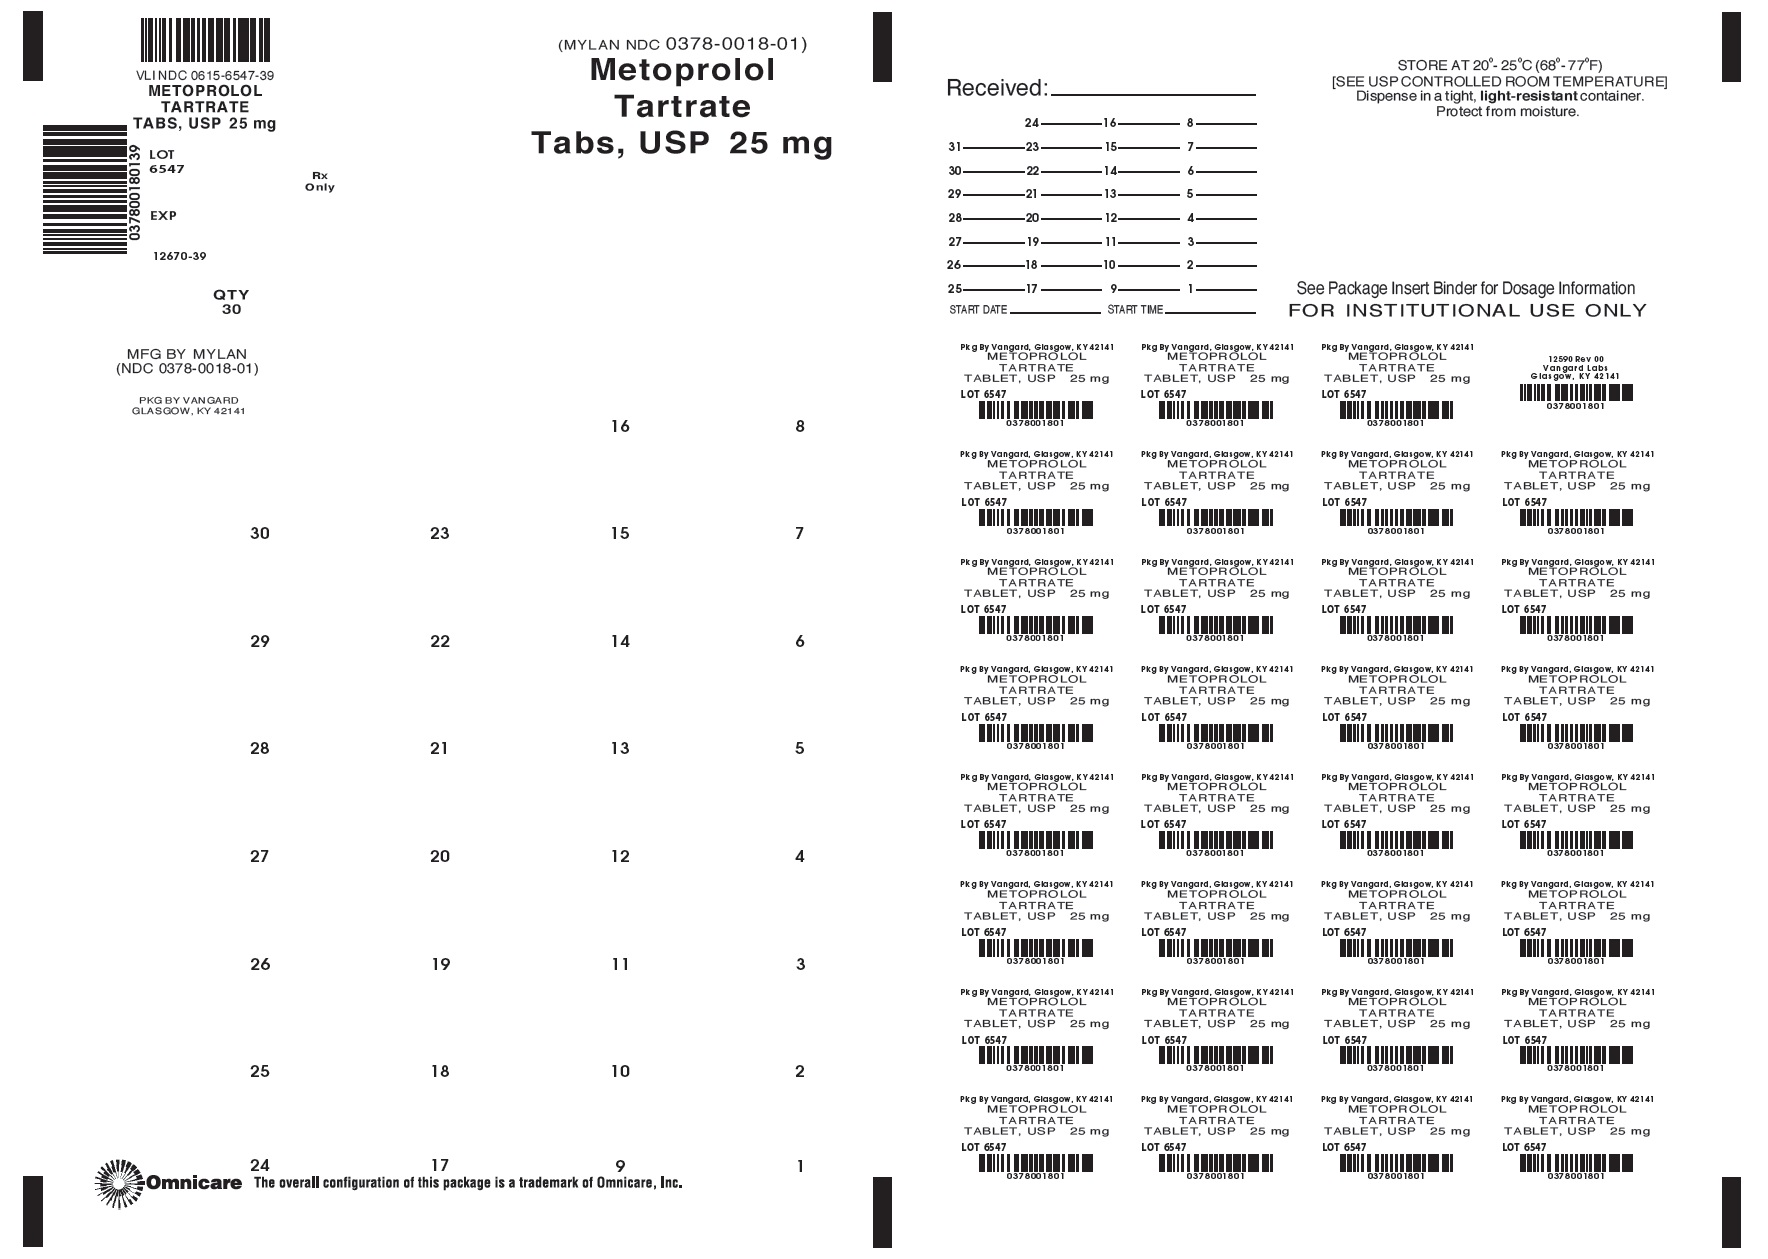 Metoprolol Tartrate Tabs, USP 25mg bingo card label